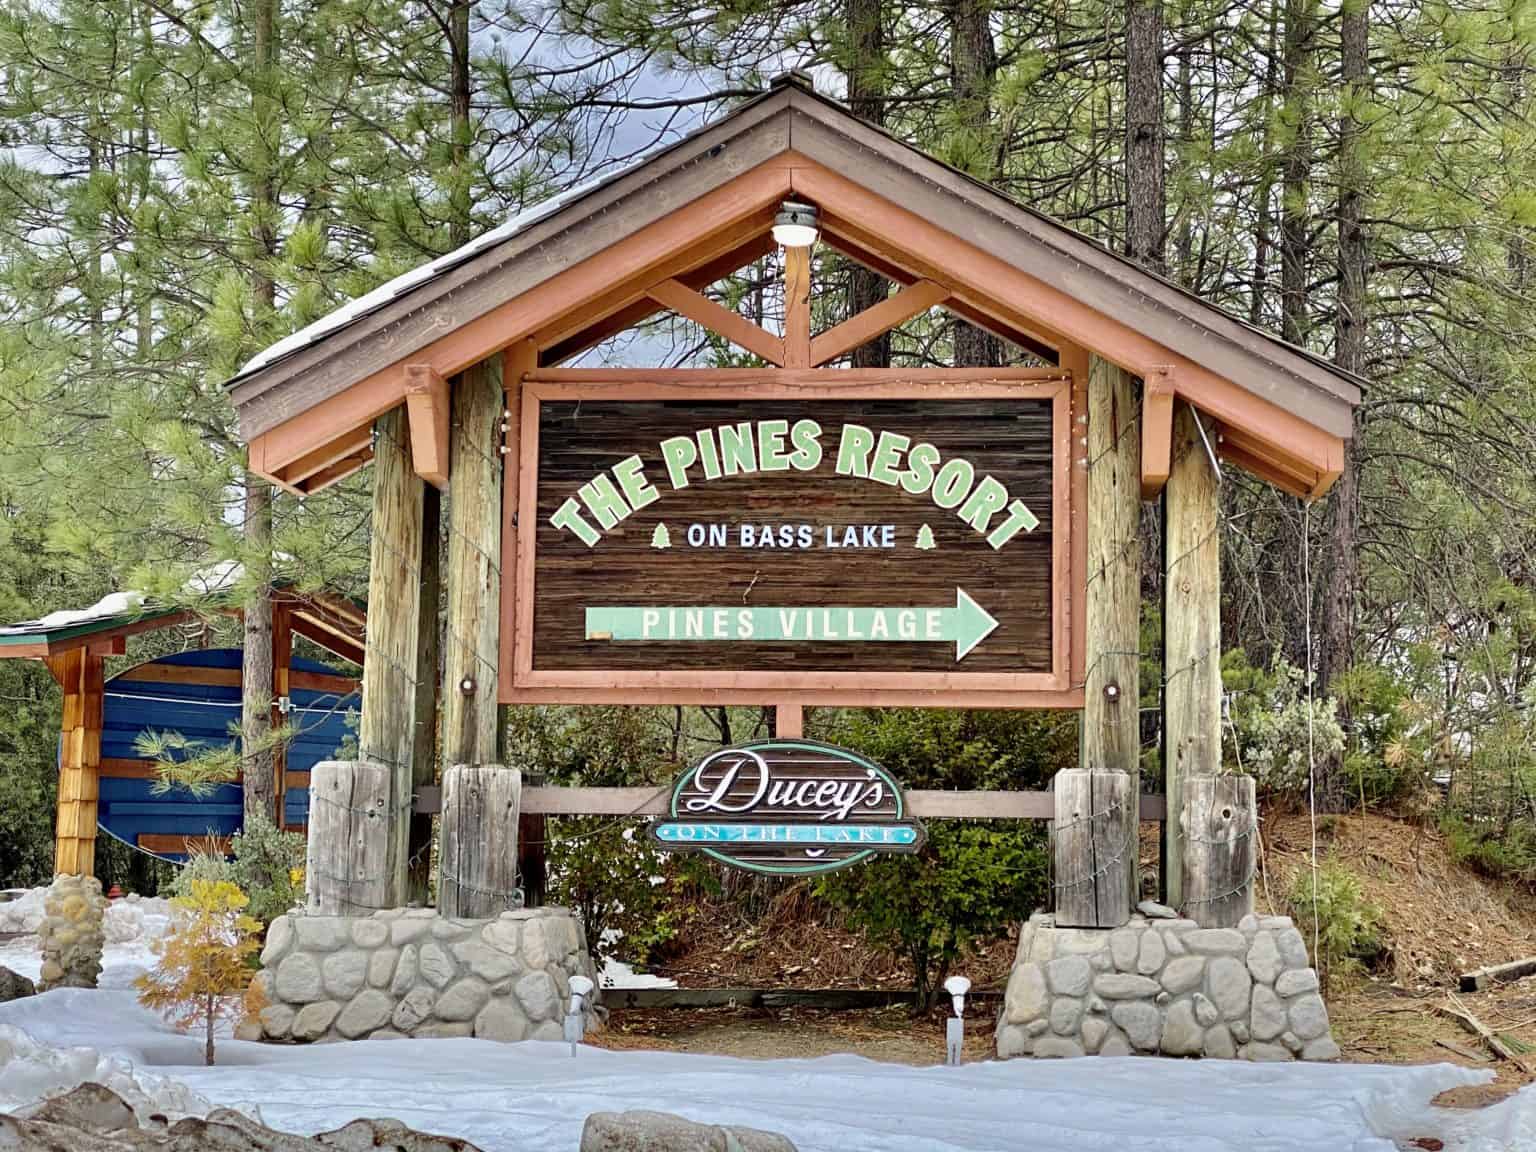 Lake bass pines resort history